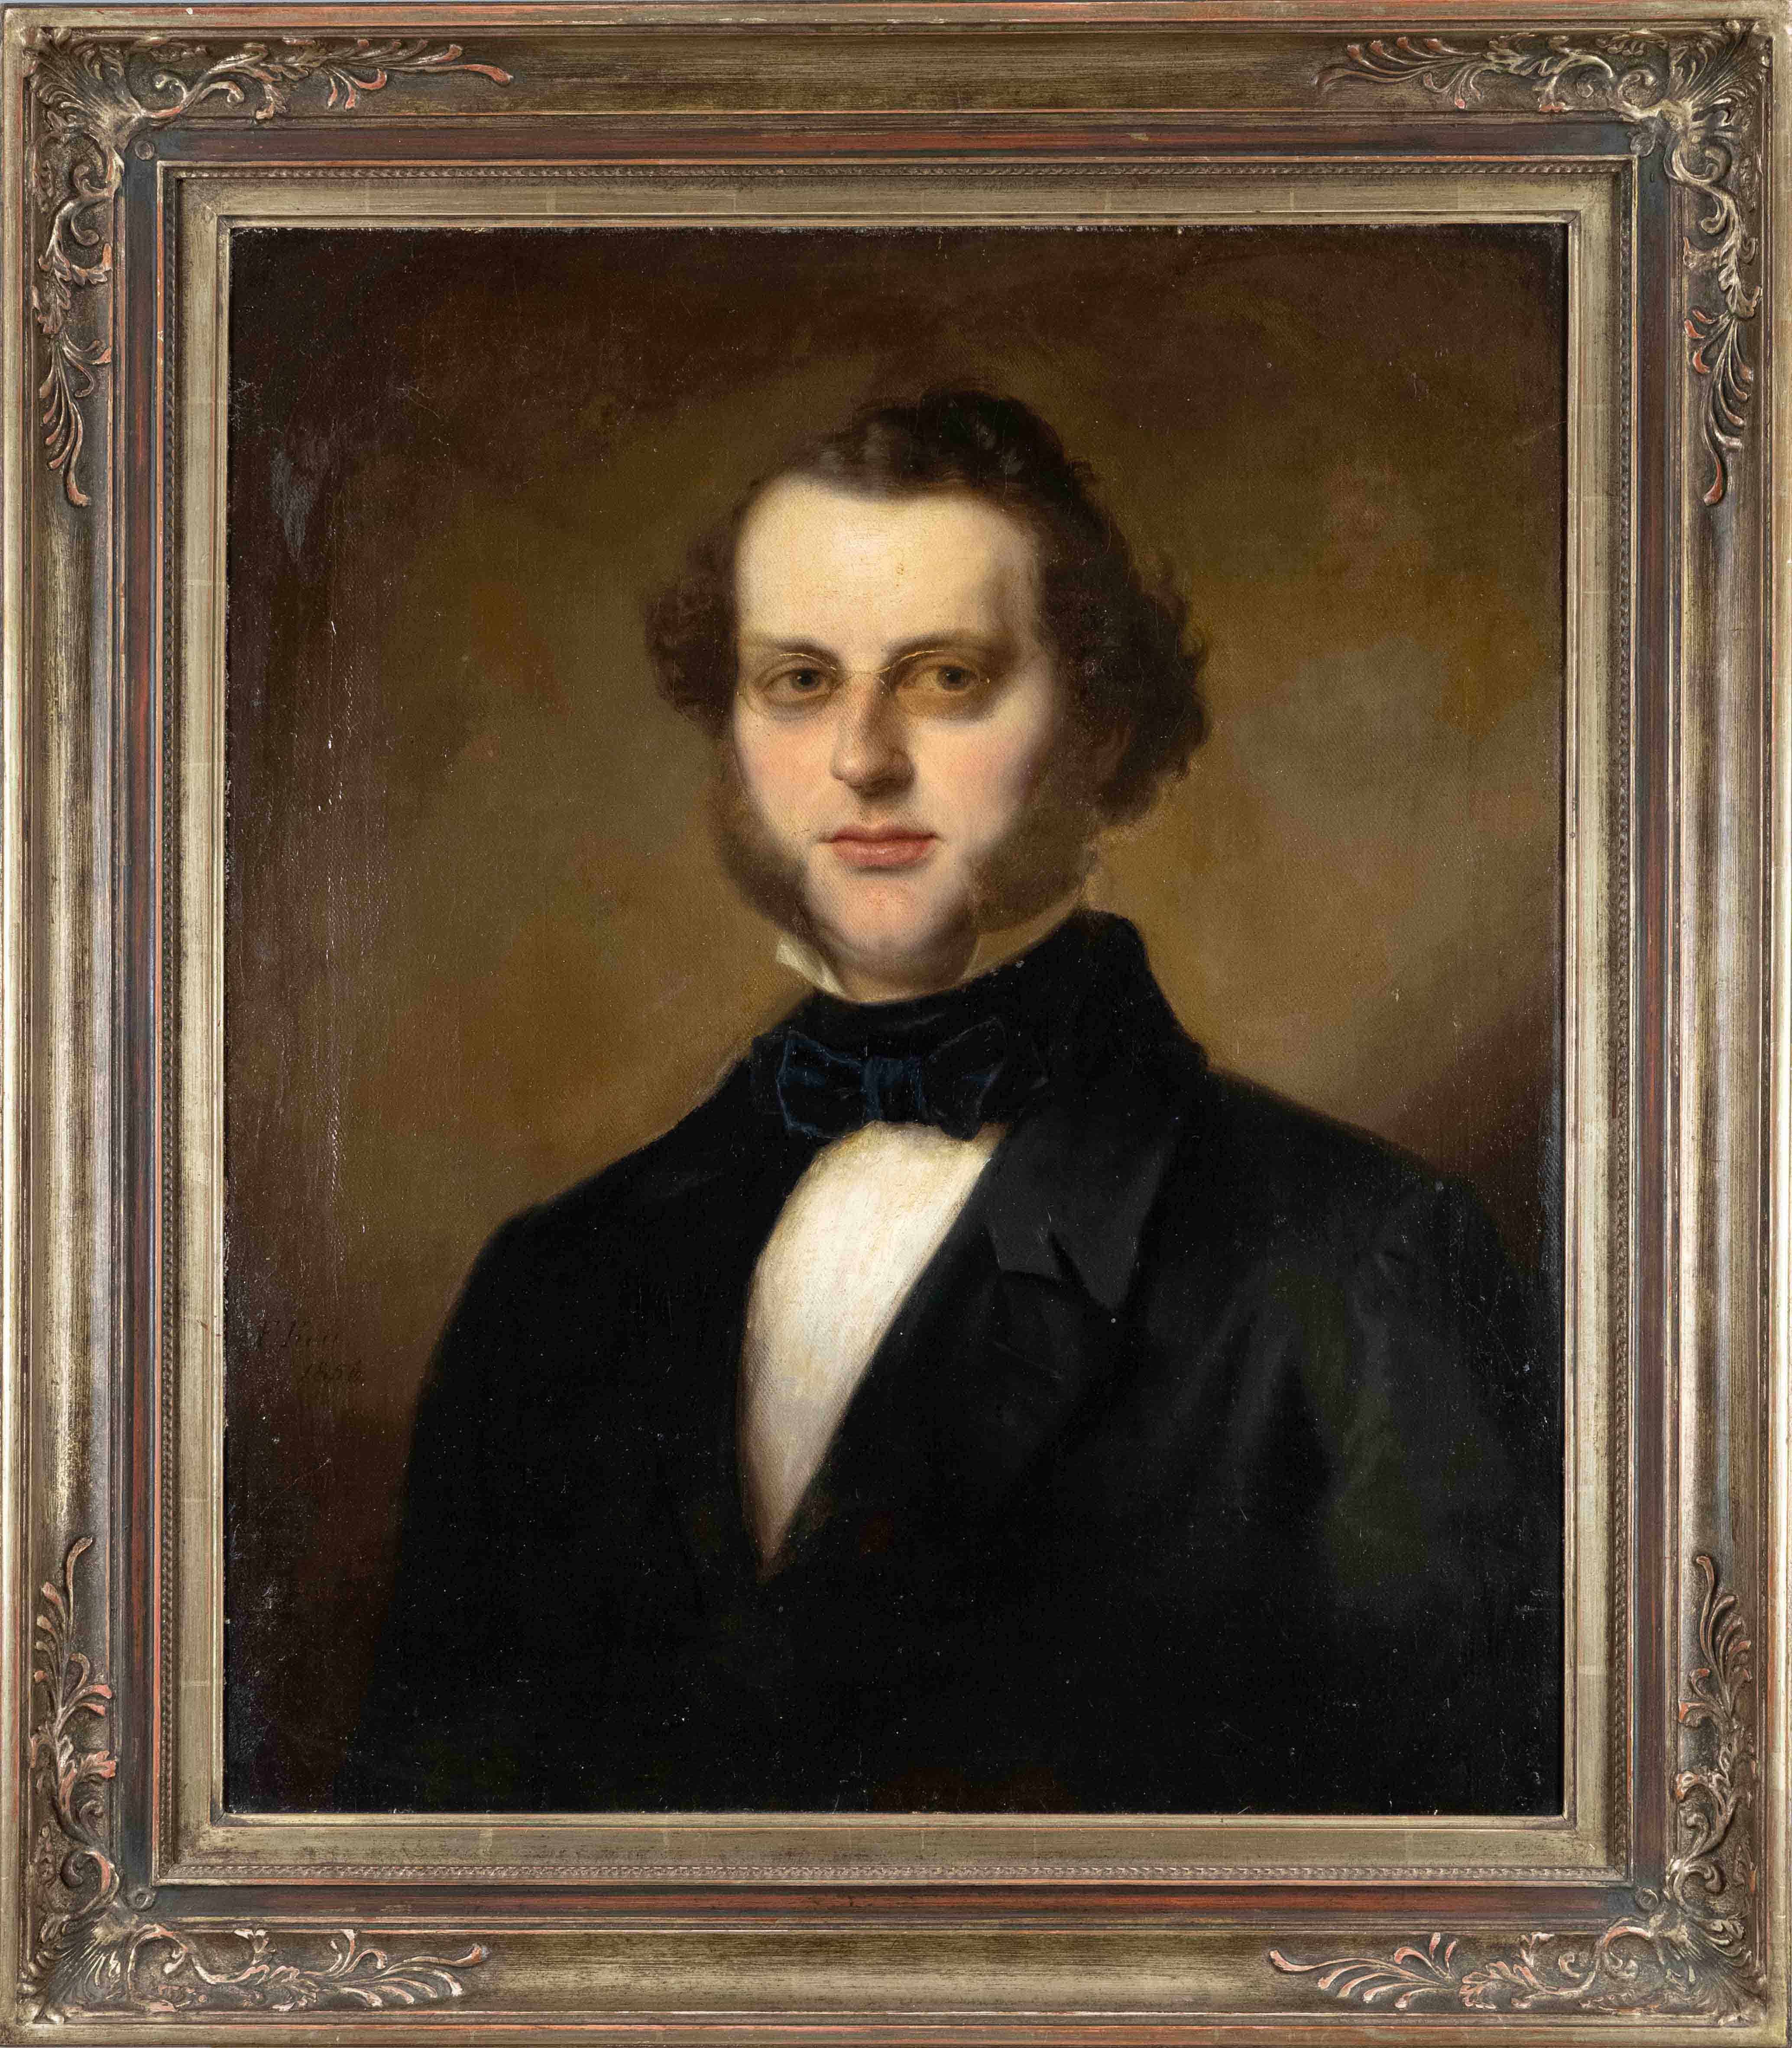 Friedrich Keil (1813-1875), German portrait painter in Silesia, studied with Kretschmar and Wach